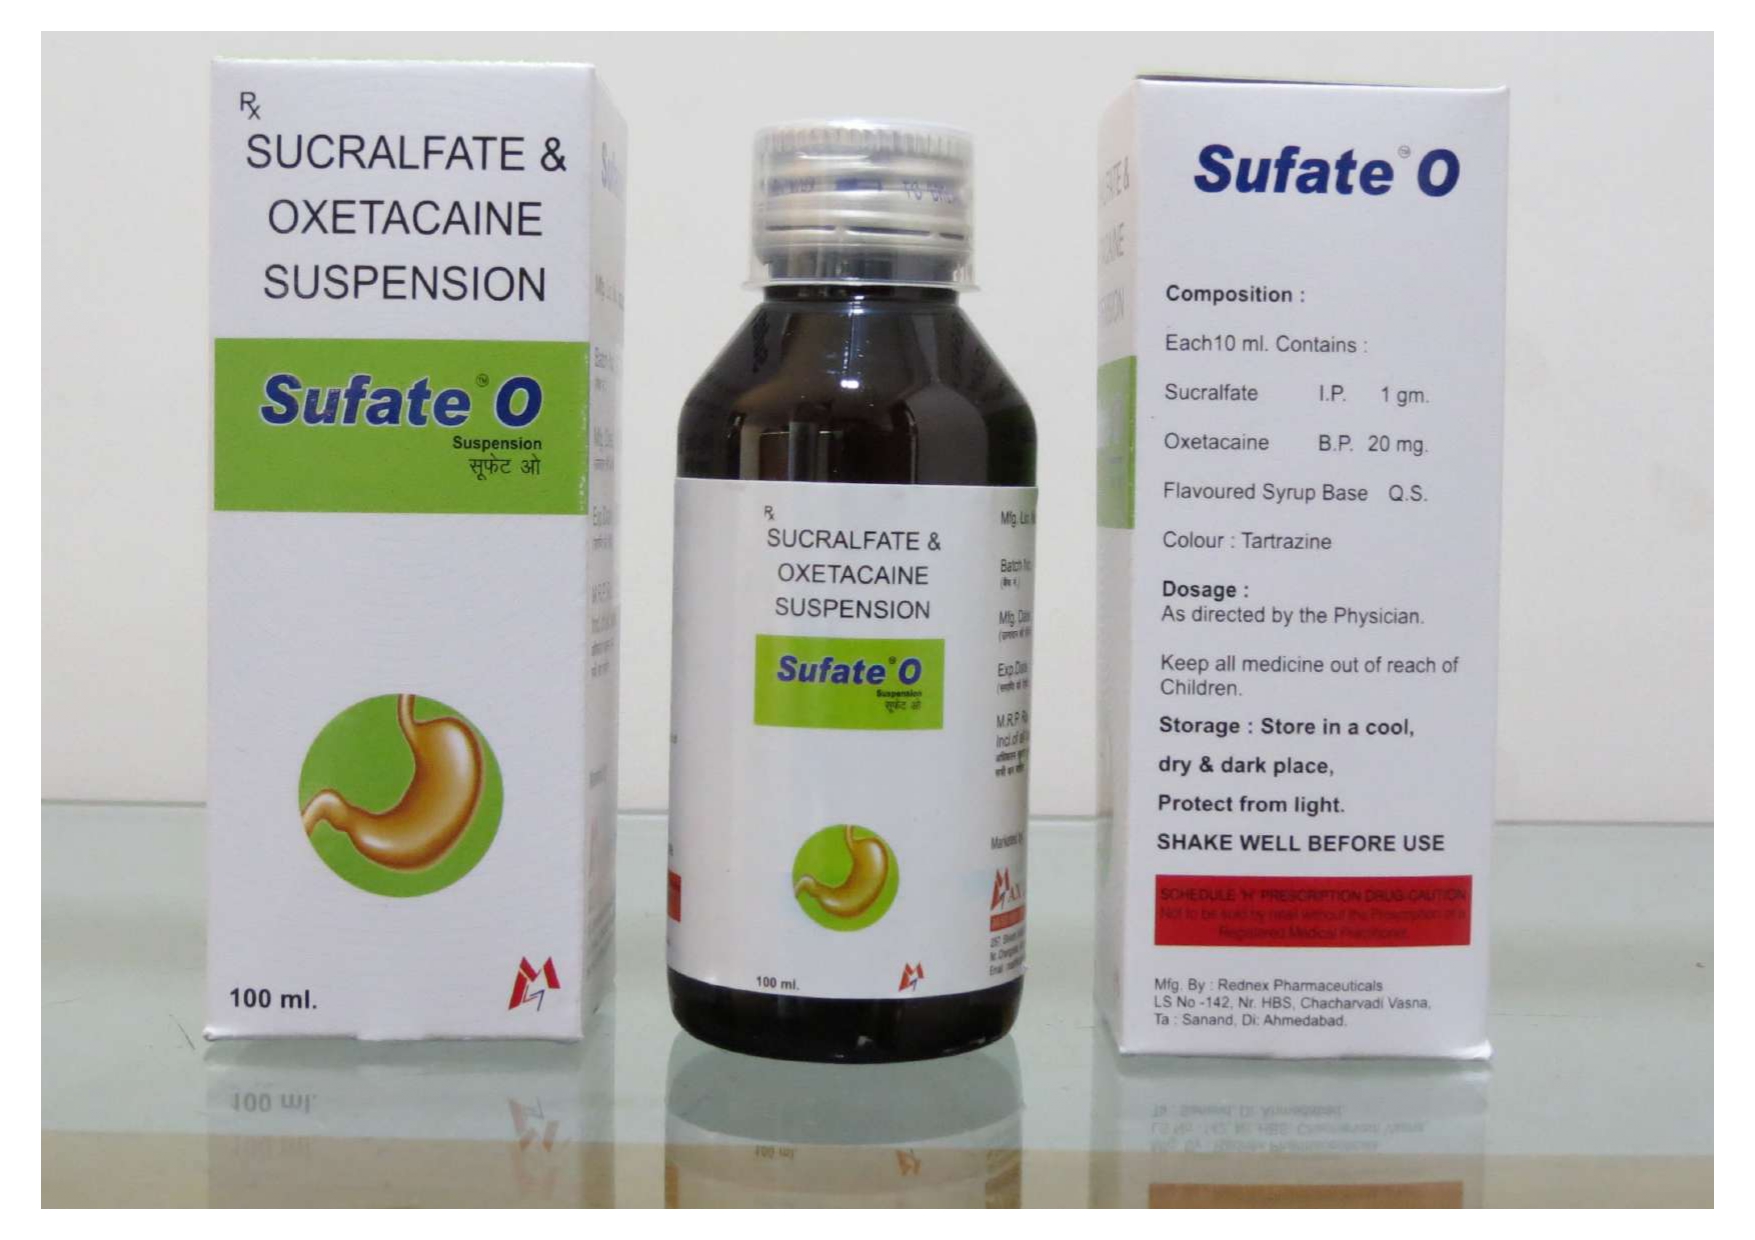 sucralfate usp 1gm + oxetacain 20mg flavoured
suspension